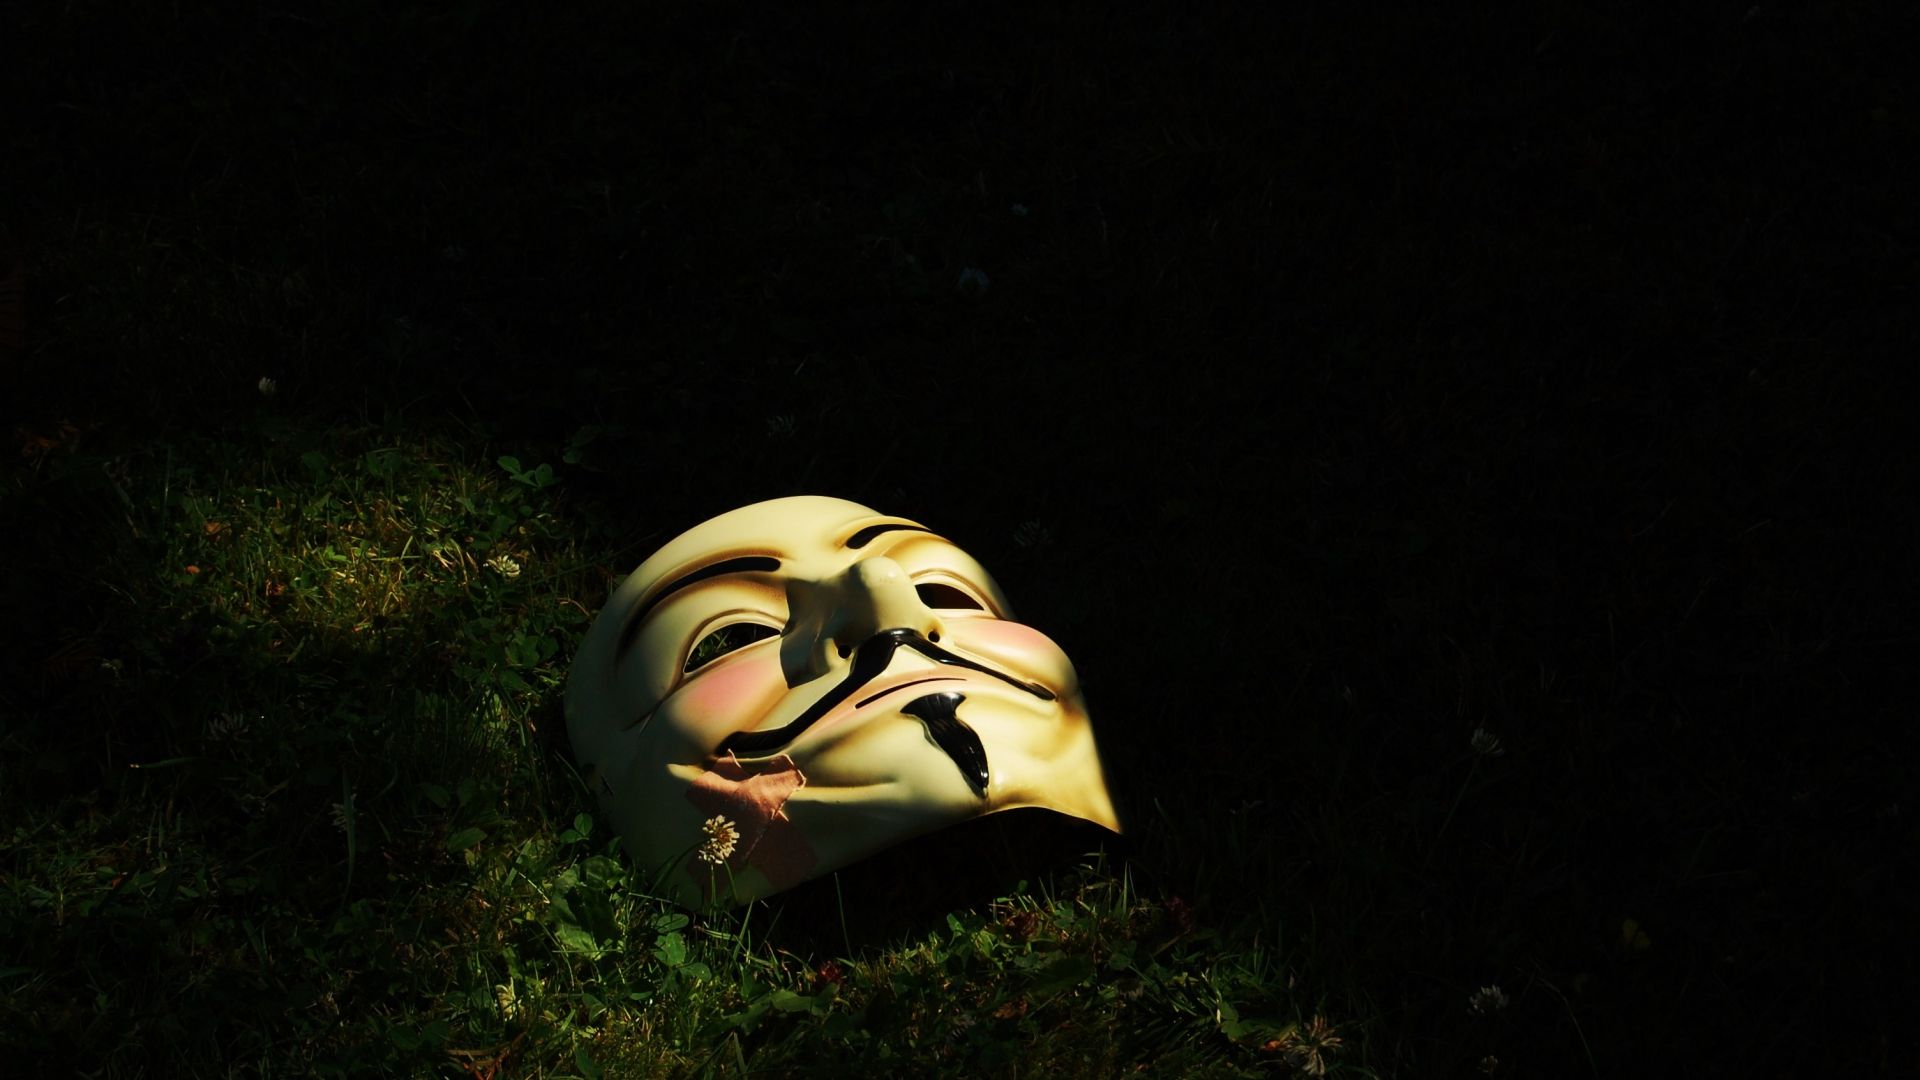 Wallpaper Mask in grass